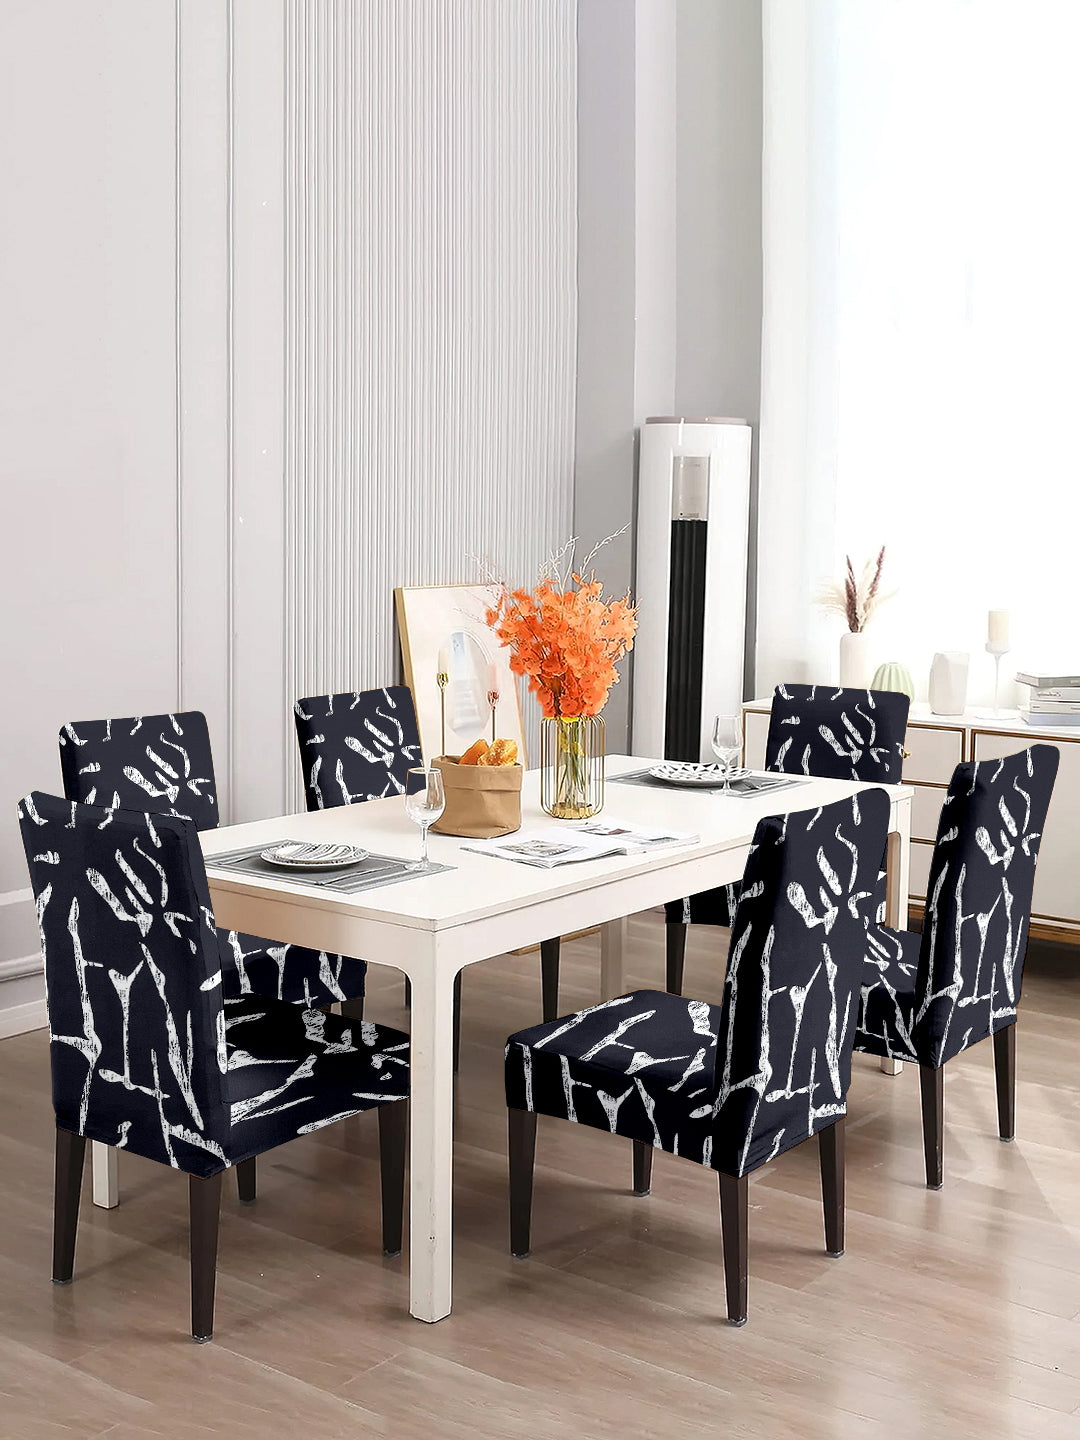 Elastic Digital Printed Non-Slip Dining Chair Covers Set of 6 - Black